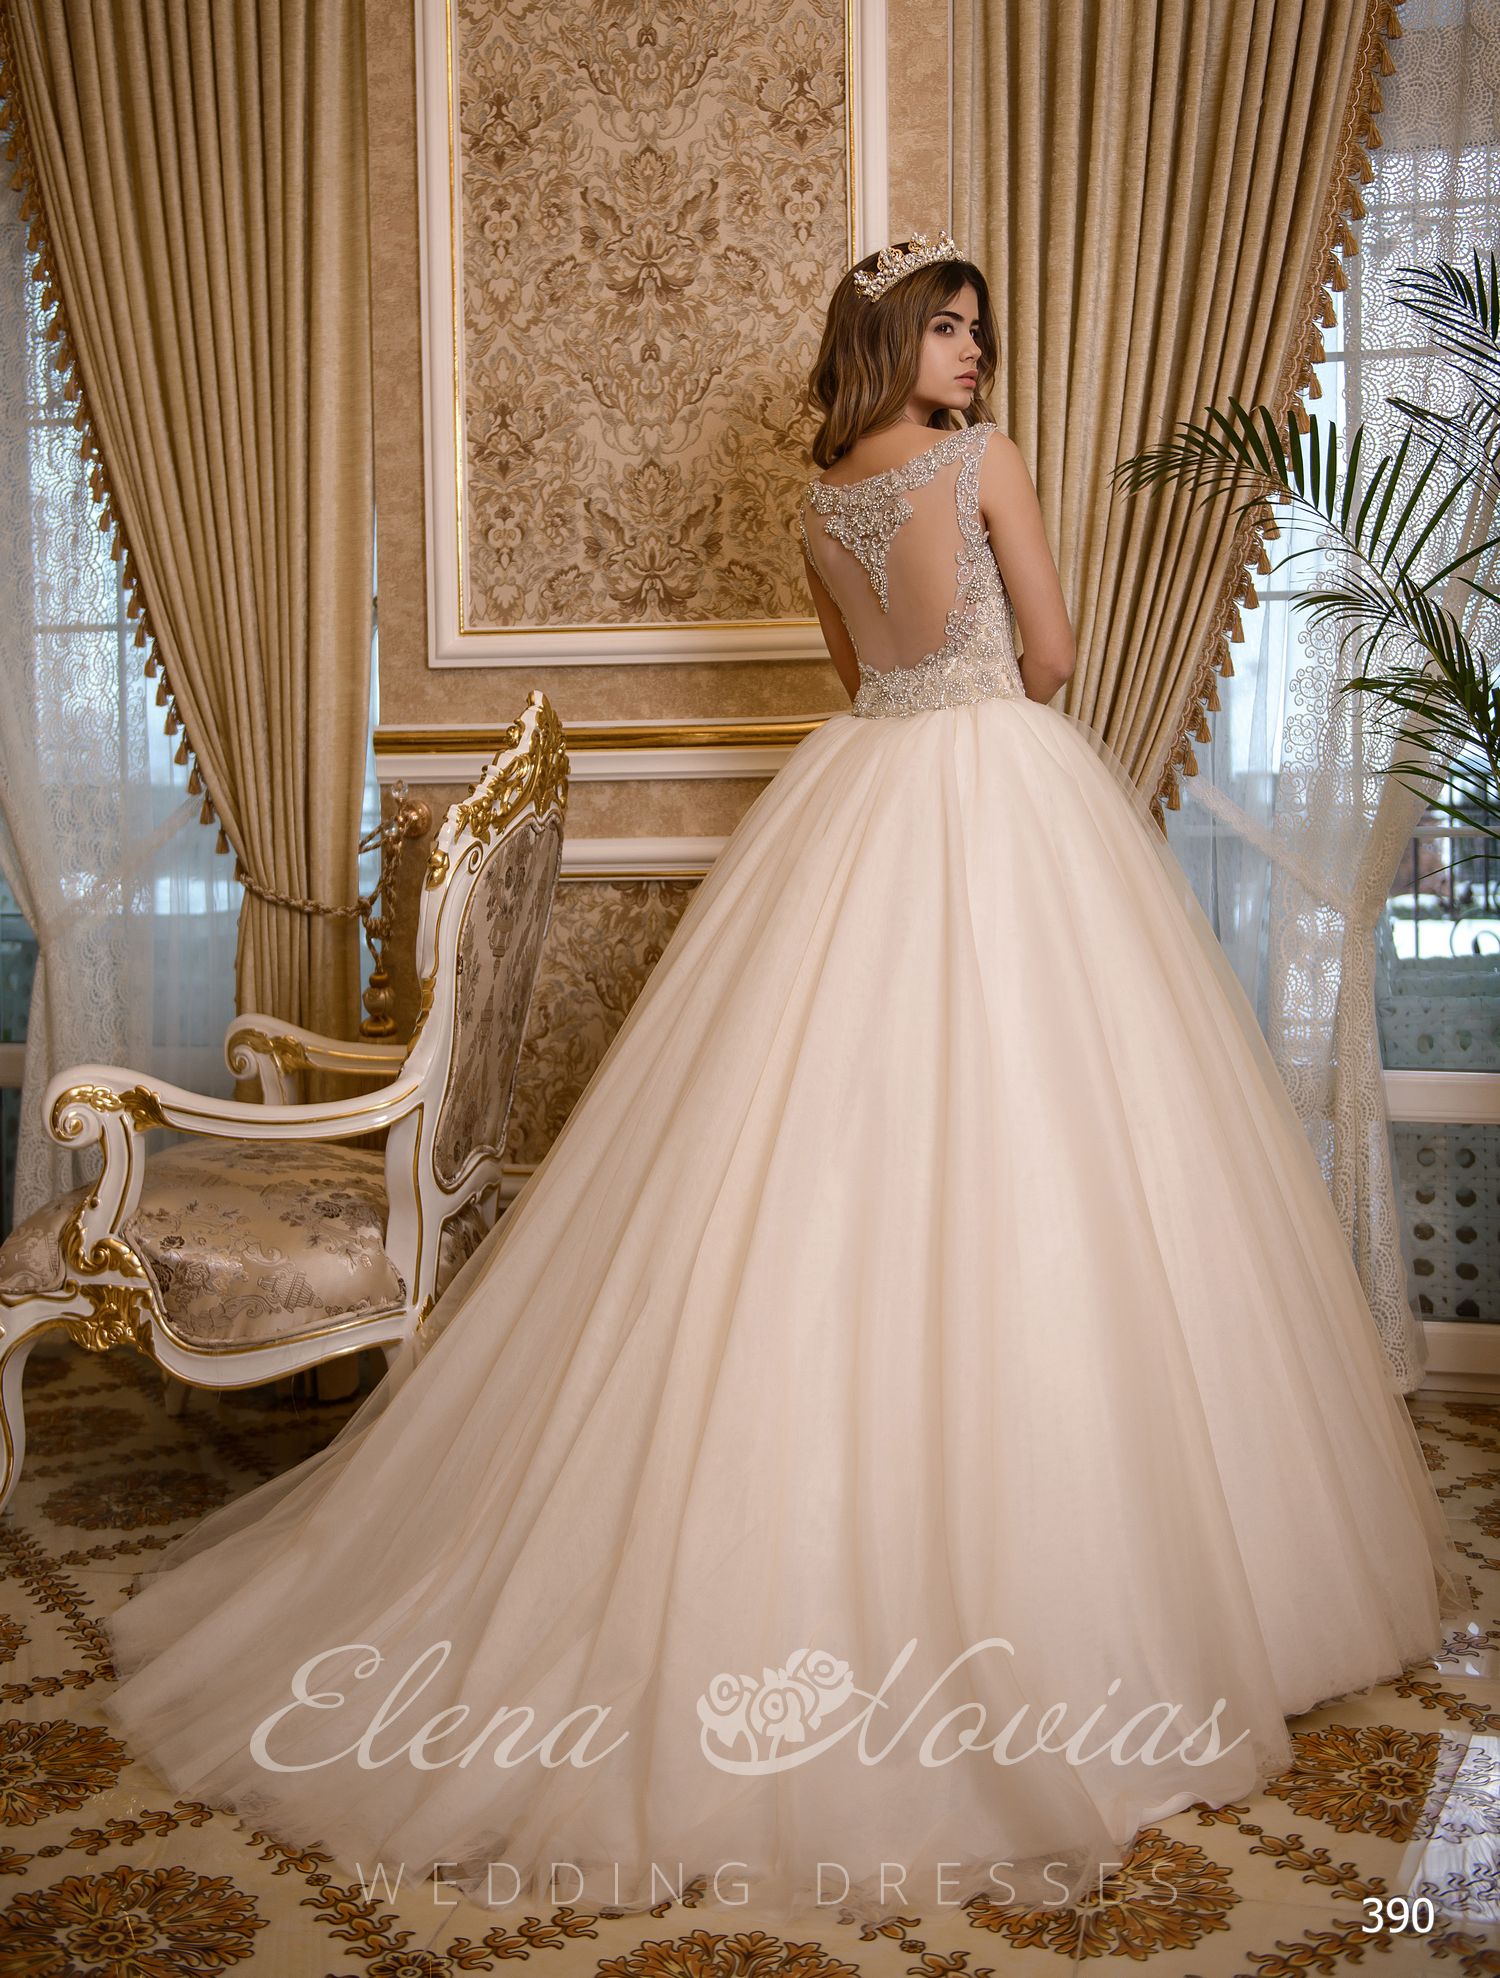 Wedding dress wholesale 390